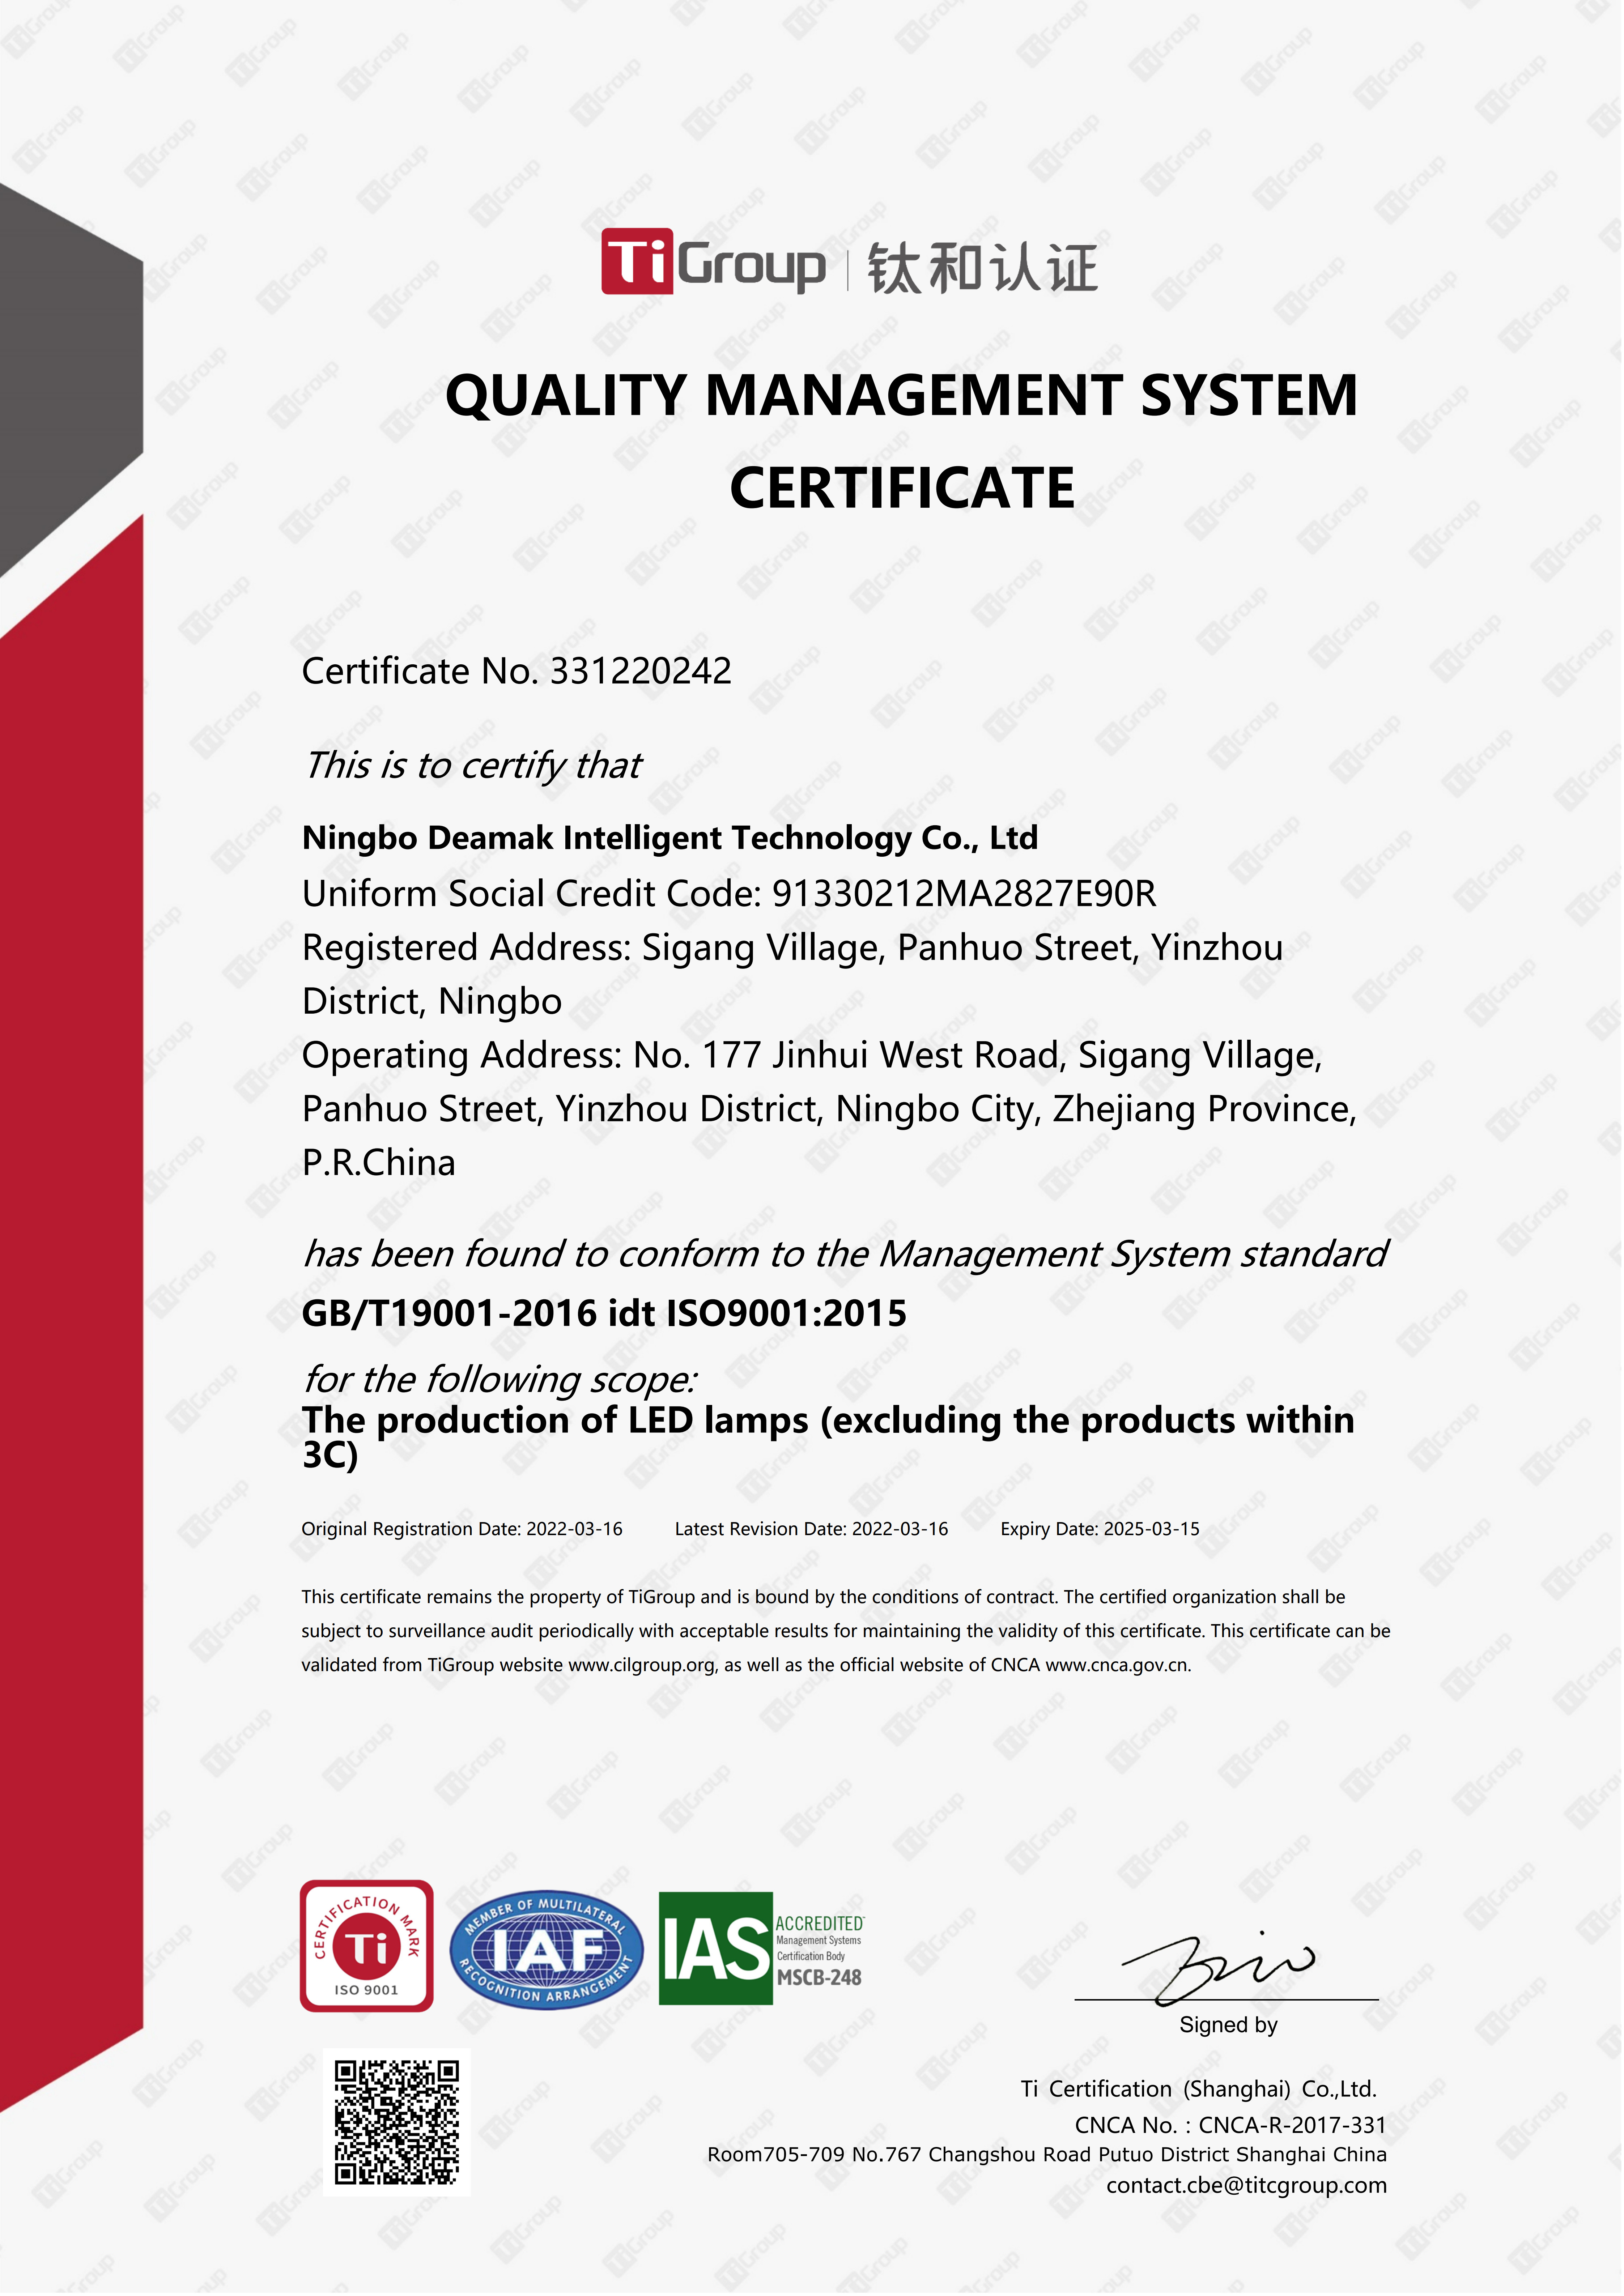 Ningbo Deamak ISO 9001 engelsk_1